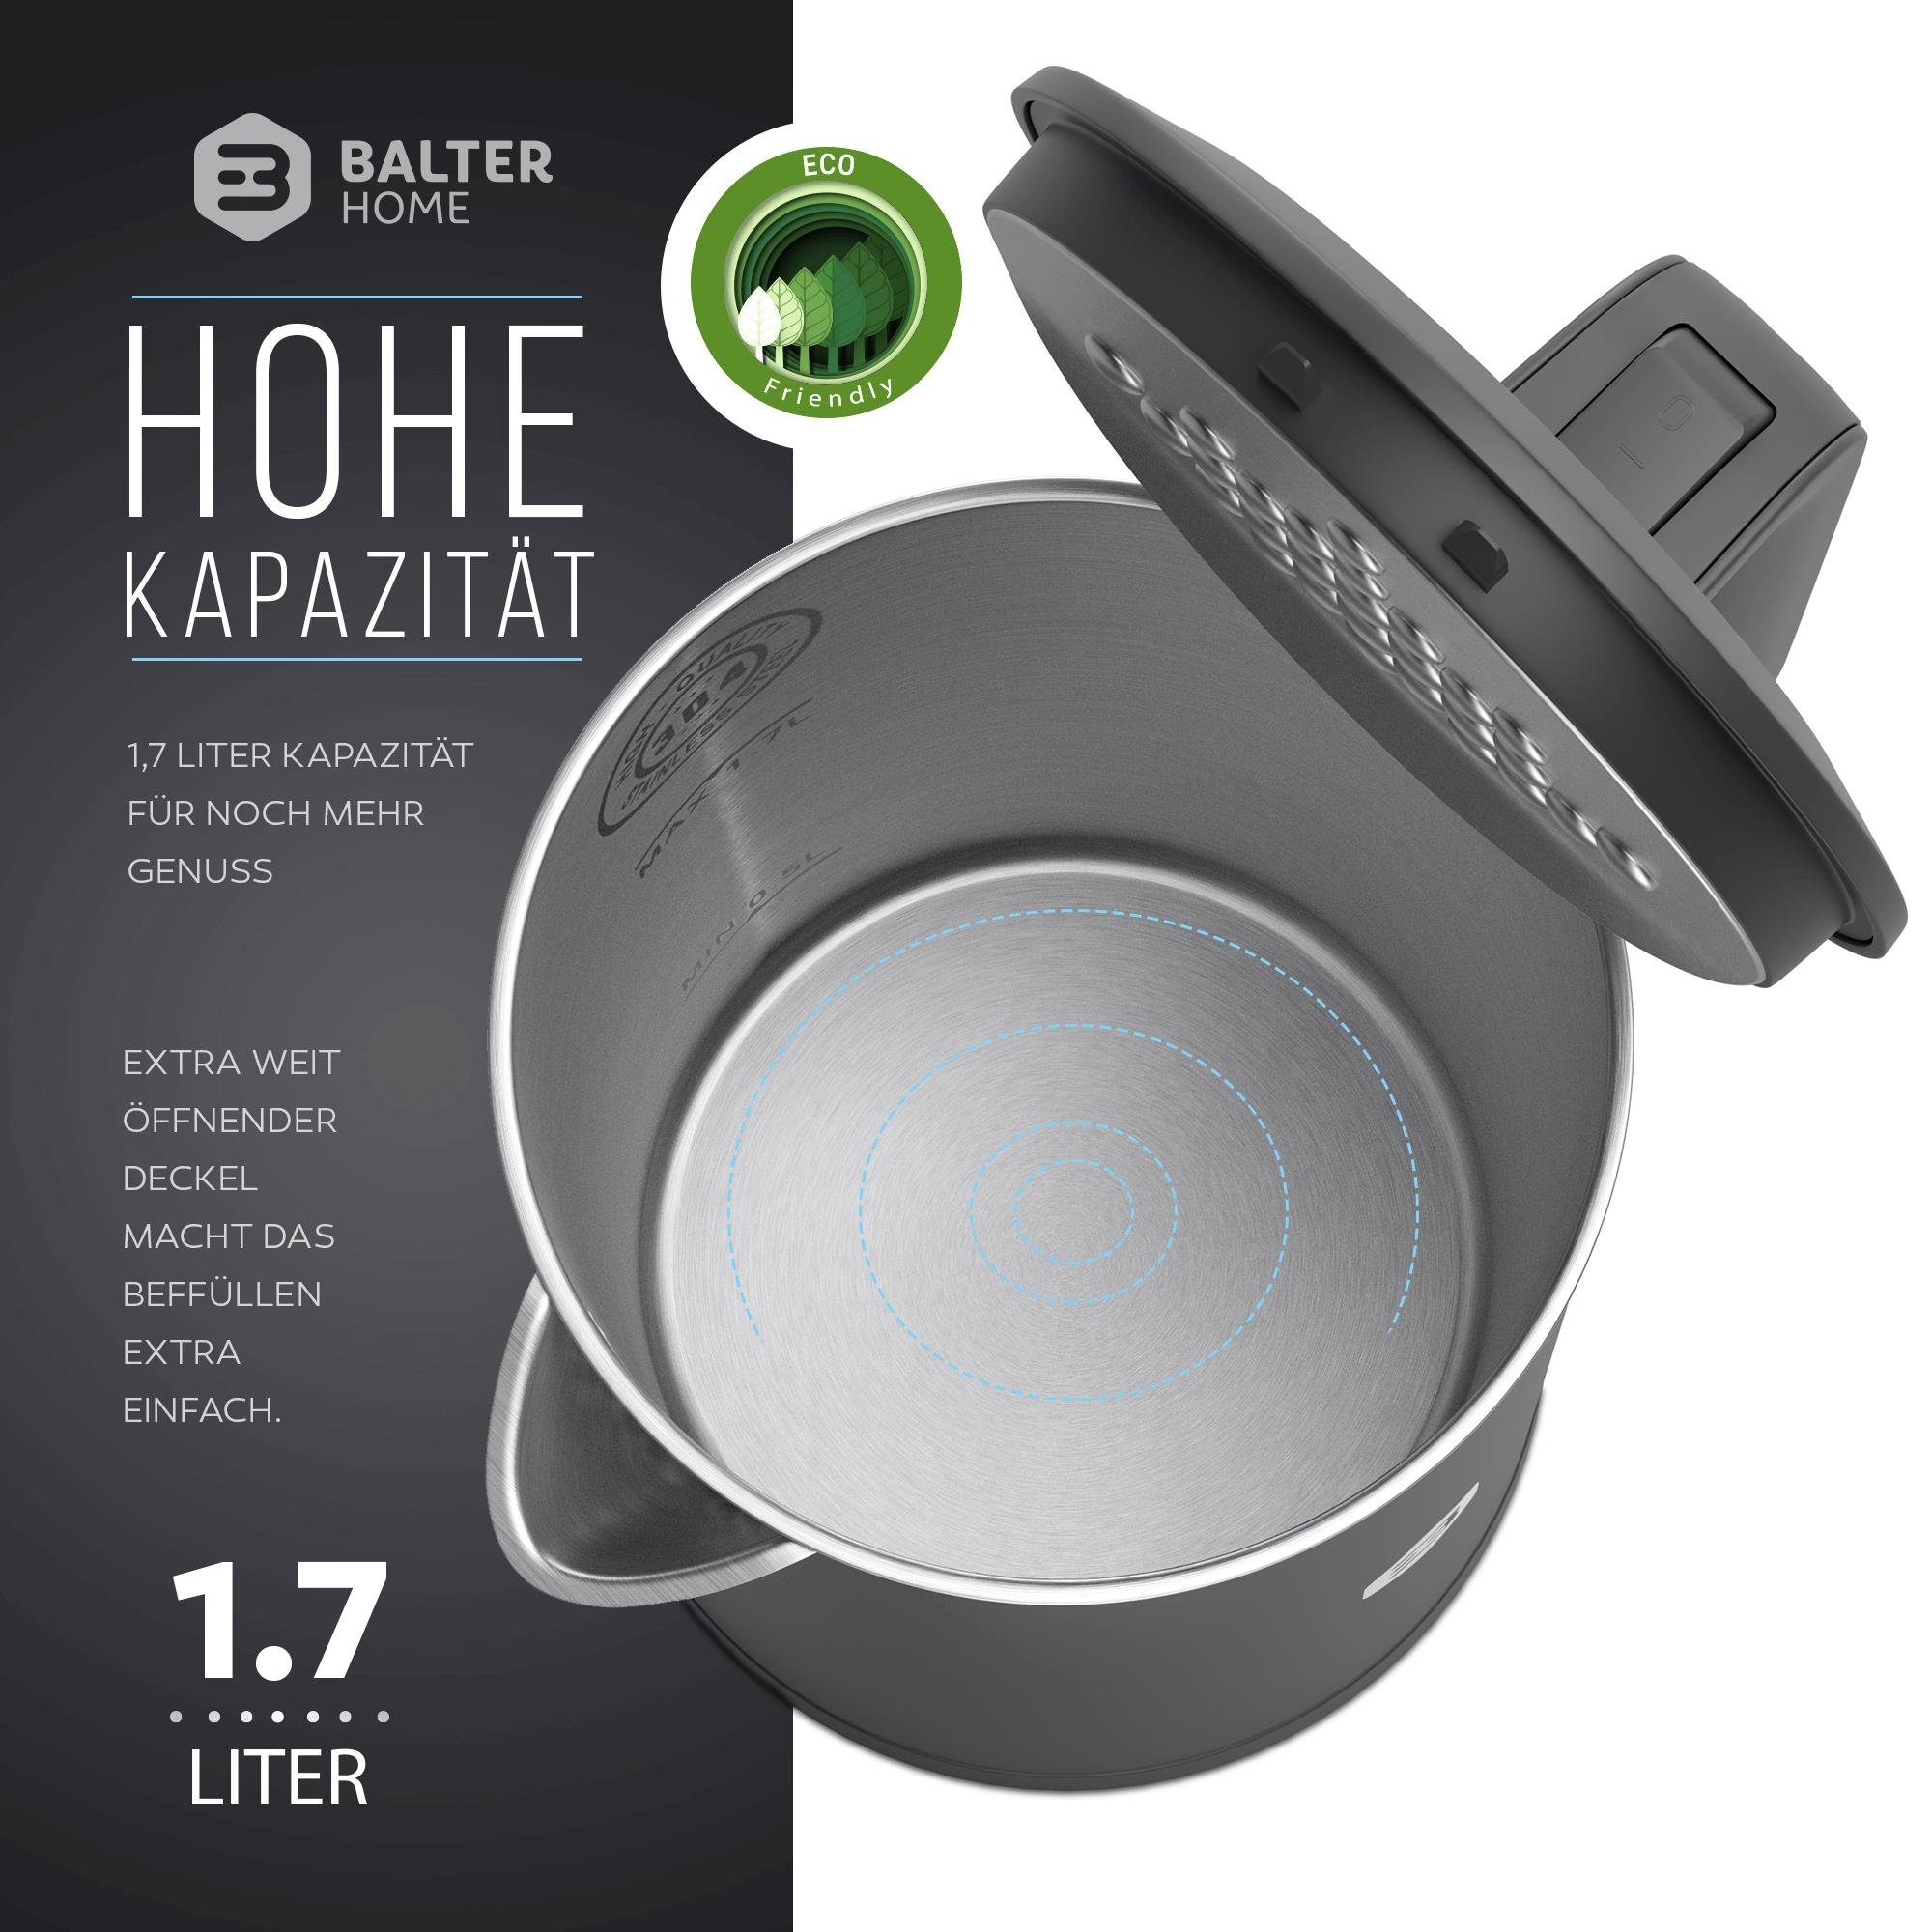 Doppelwand BPA 1,7 Edelstahl, Design, WK-4, frei, grau Wasserkocher Balter Liter, LED,